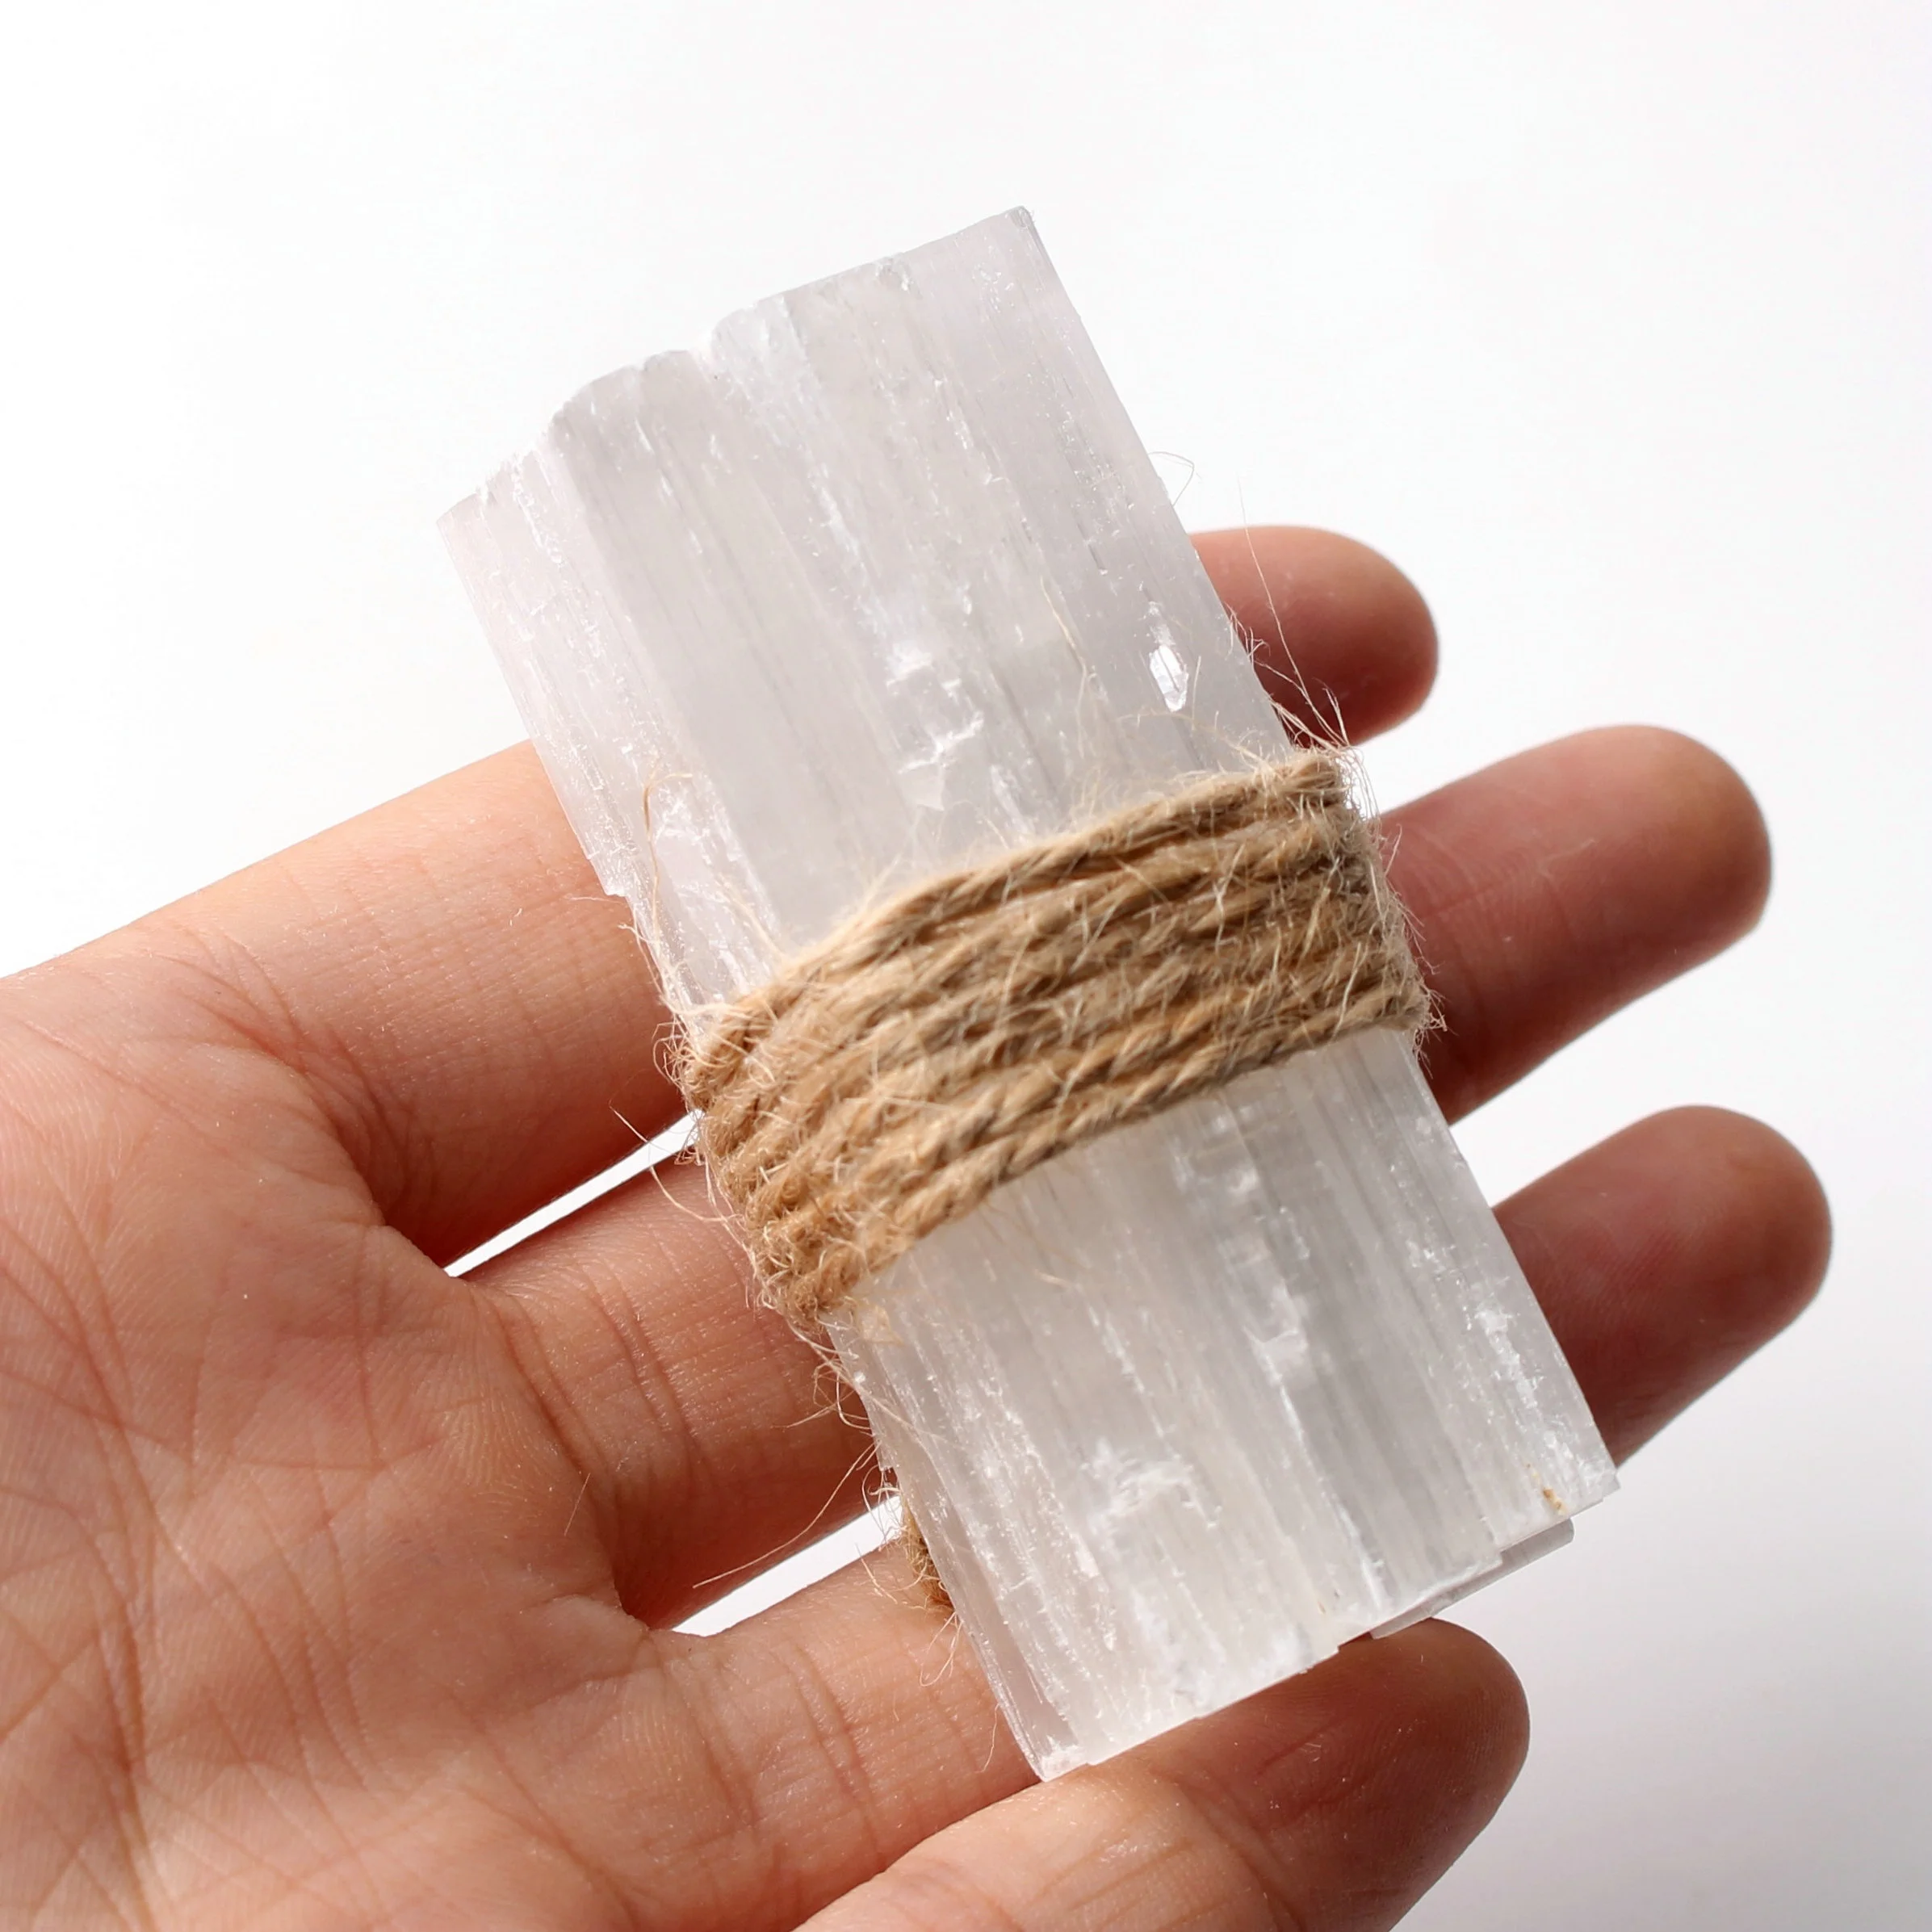 10pcs natural white selenite crystal stick chips gypsum quartz rough minerals specimen point healing stone